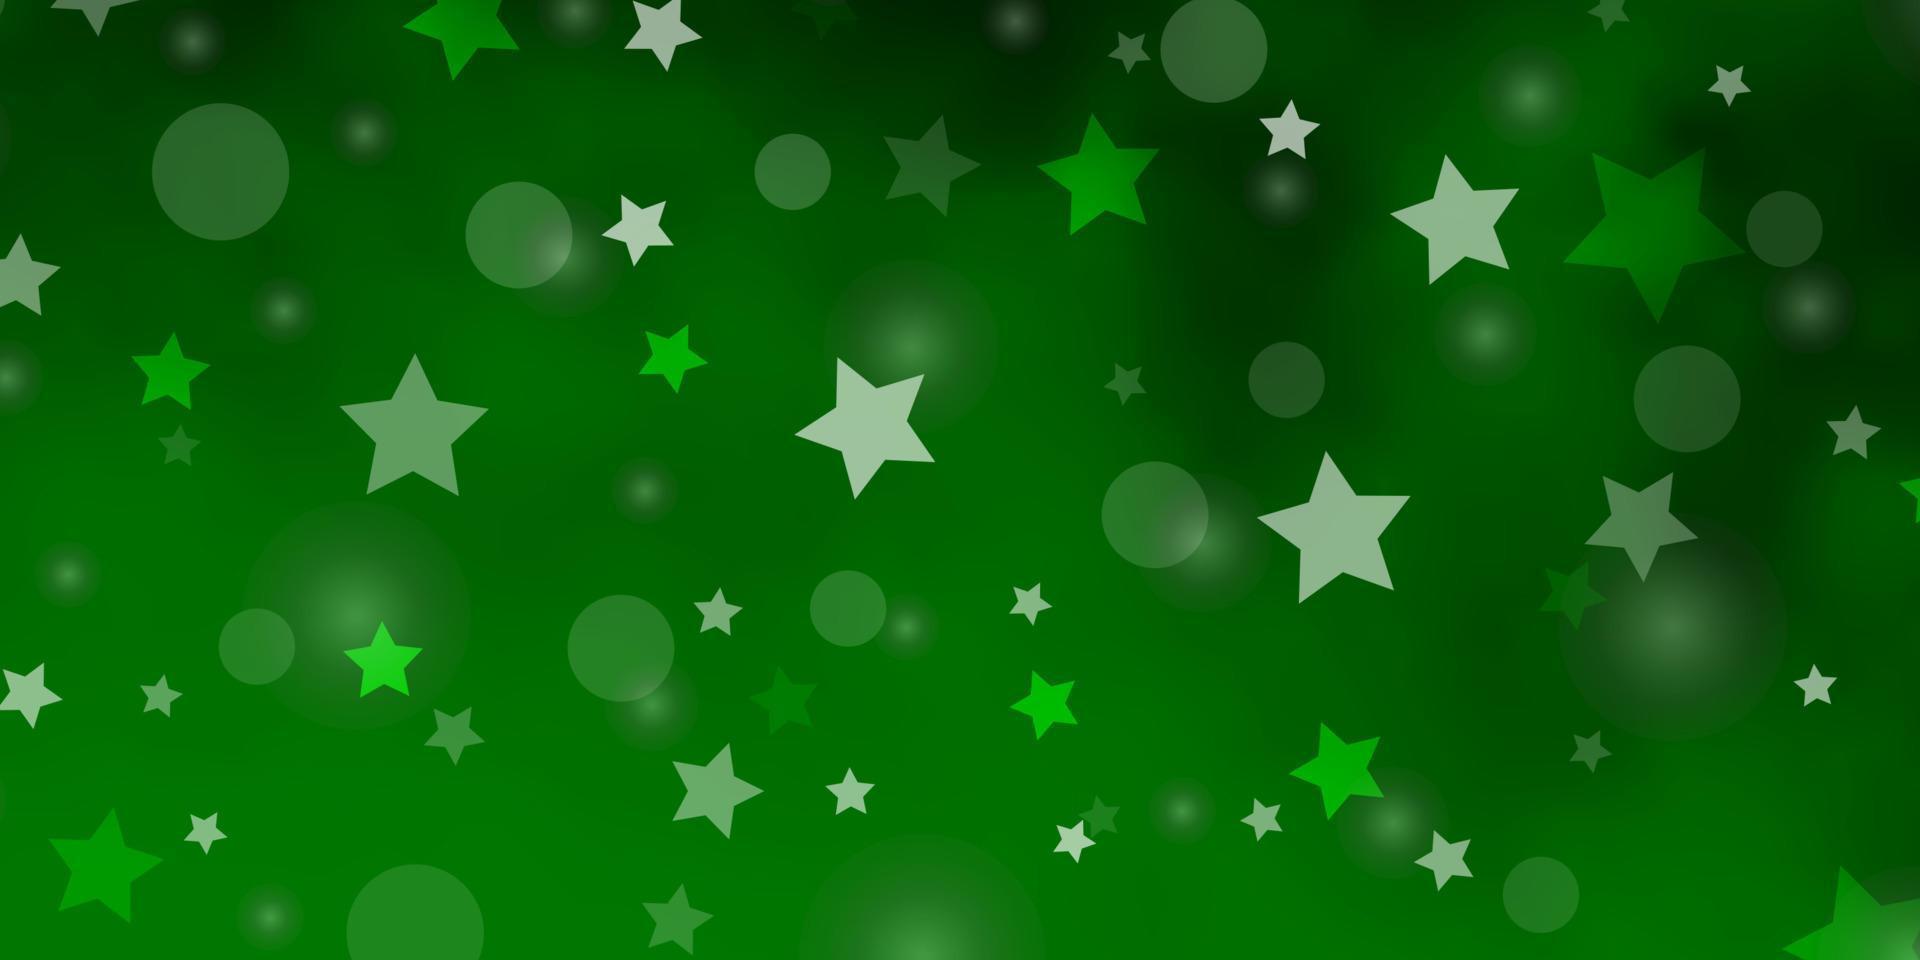 modelo de vetor verde claro com círculos, estrelas.